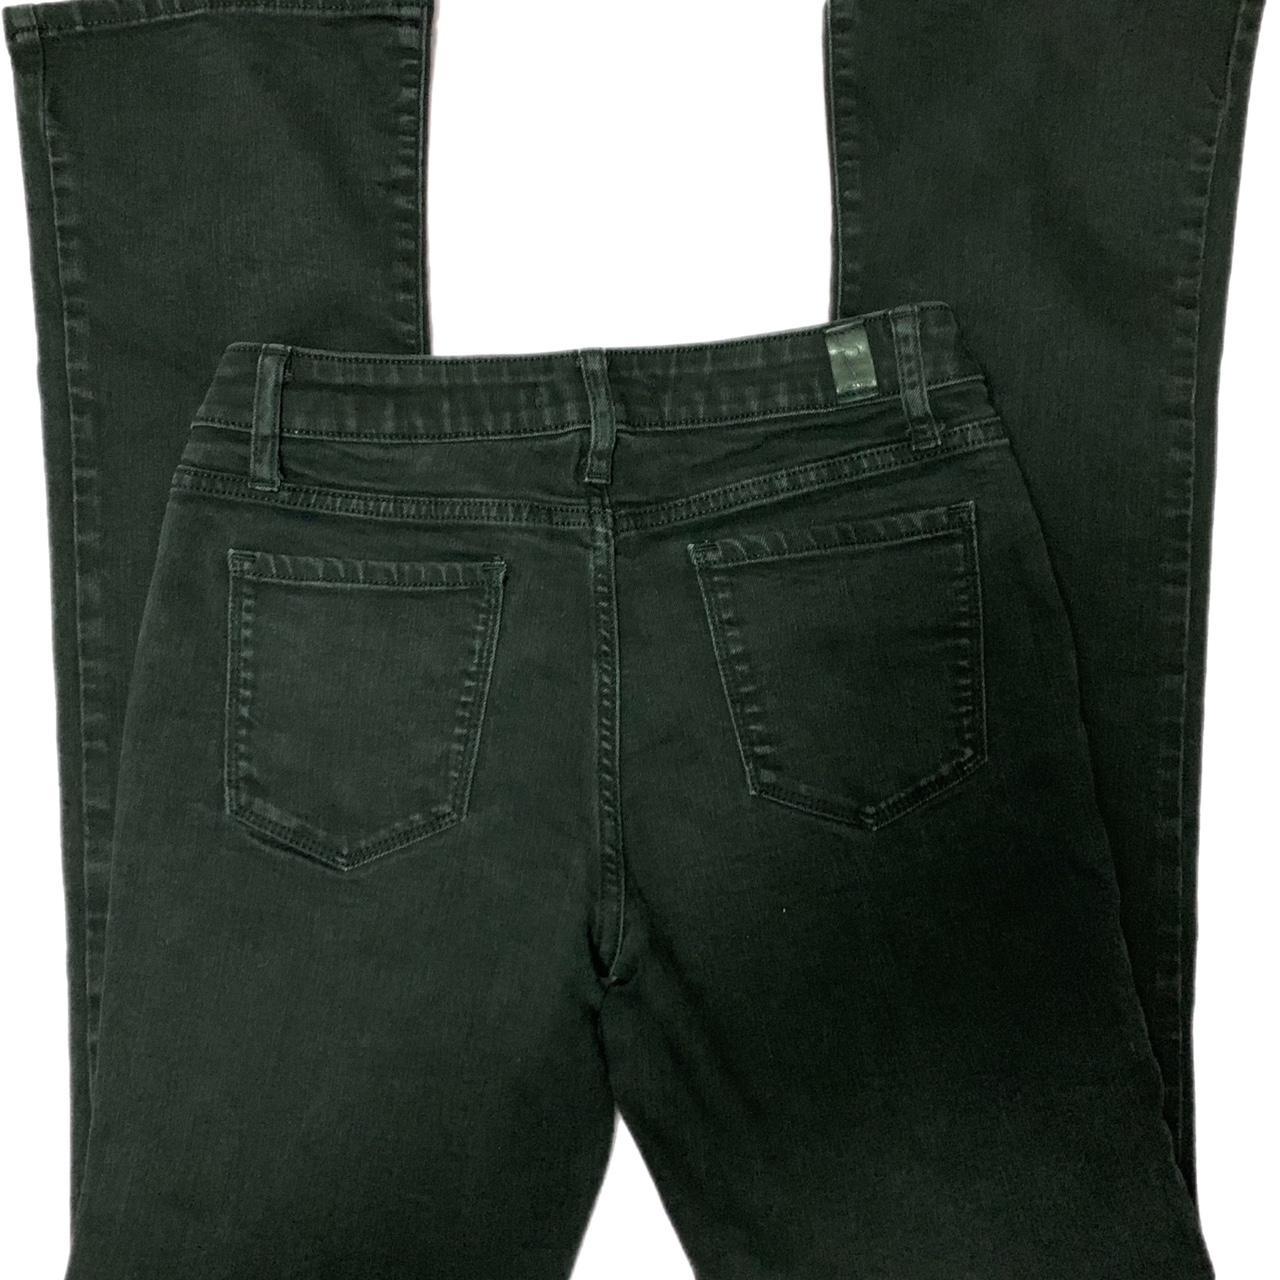 Simply Vera / Vera Wang Glossy Black Pants / Jeans - Size 12